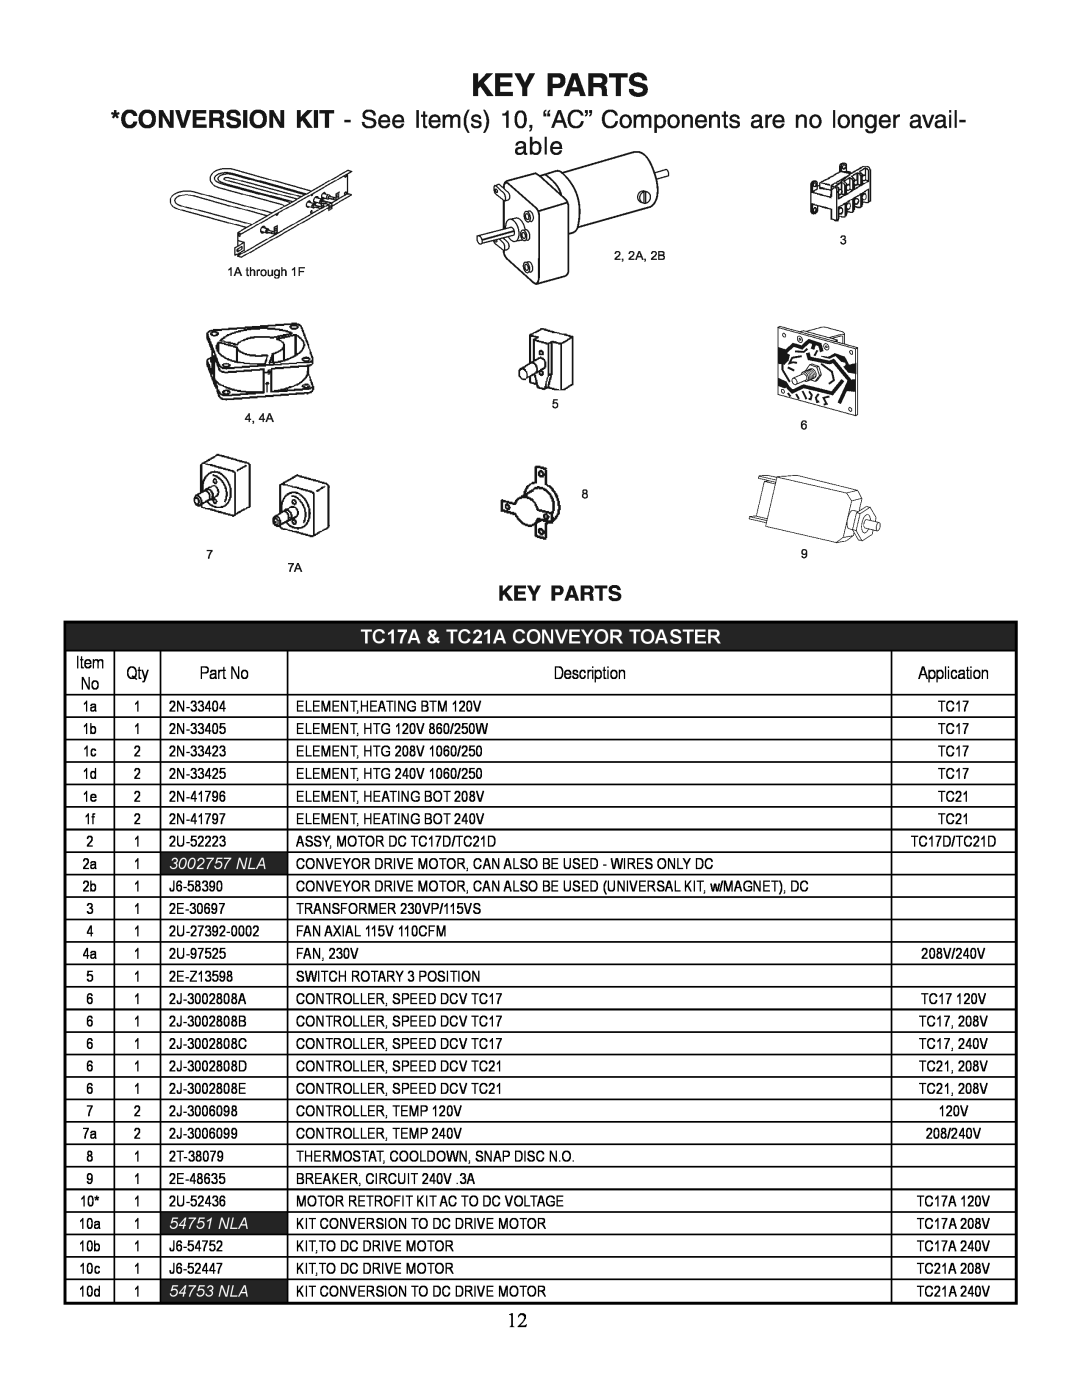 Toastmaster manual Key Parts, able, TC17A & TC21A CONVEYOR TOASTER, 3002757 NLA, 54751 NLA, 54753 NLA 